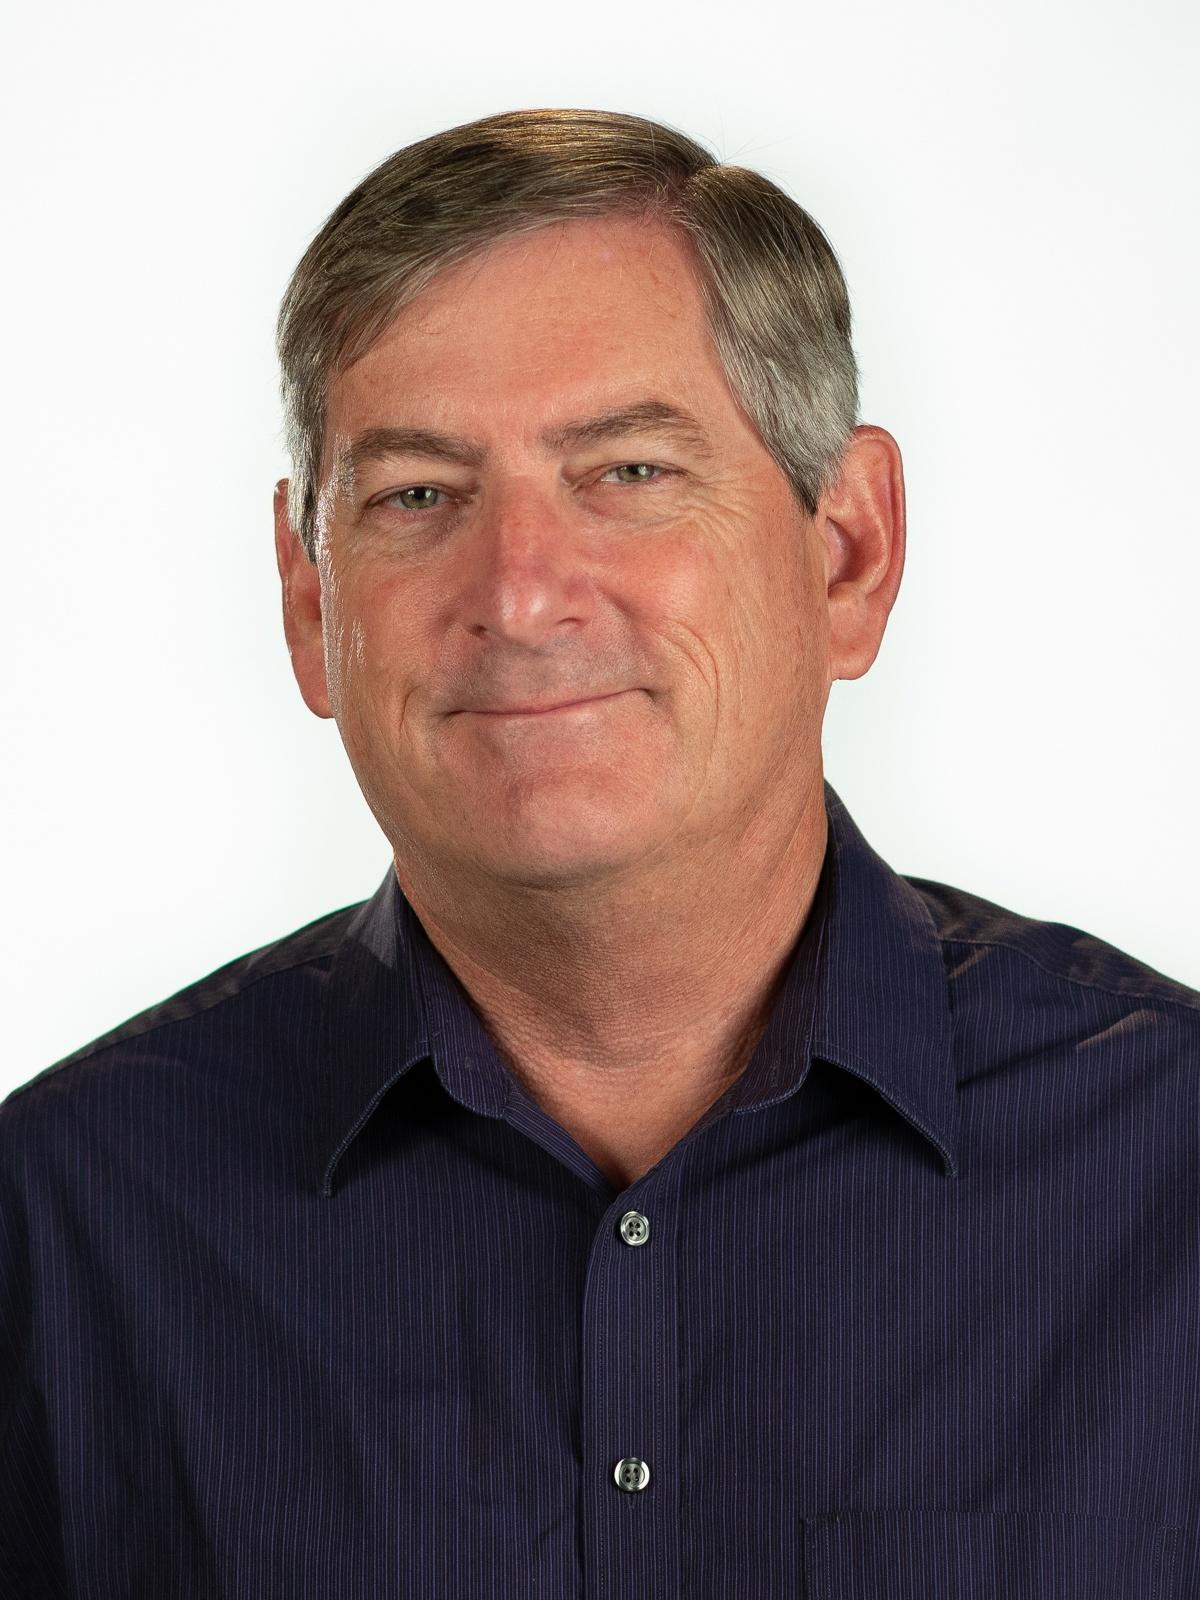 Phil Titus, Technical Director